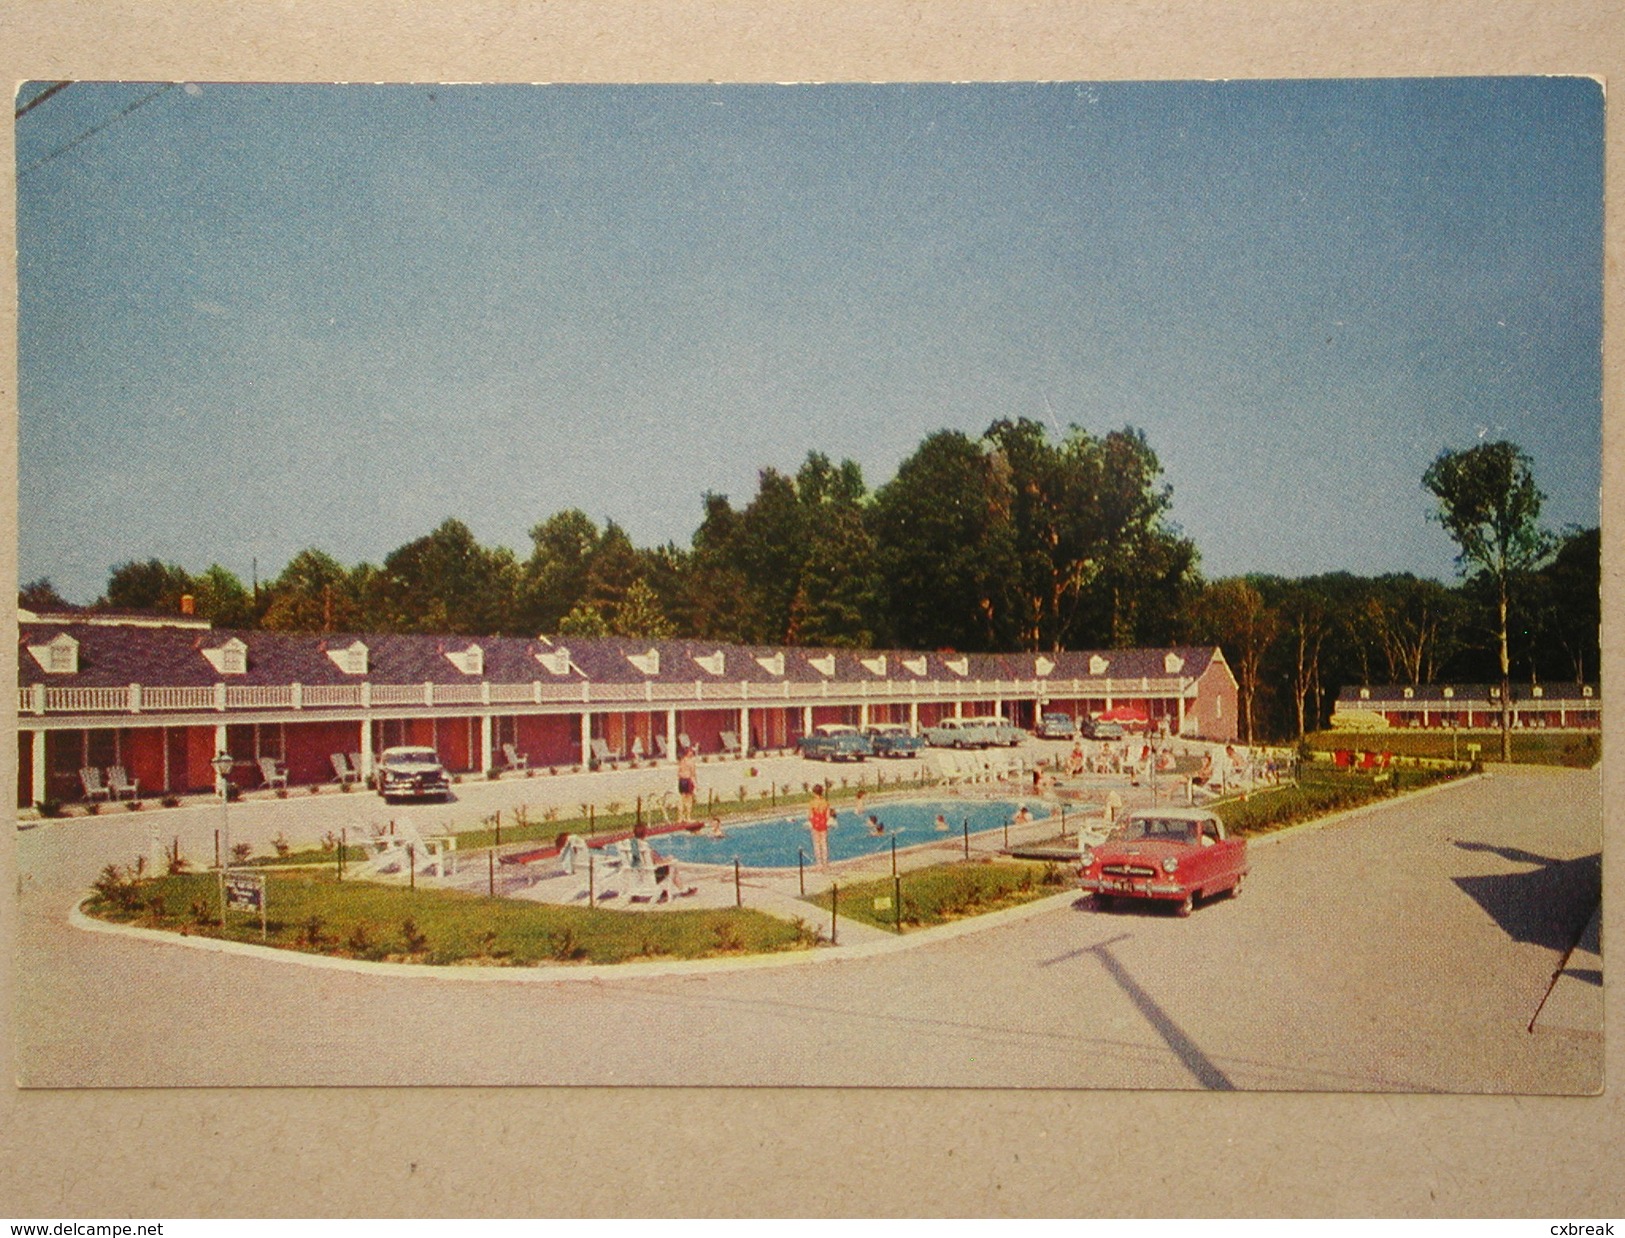 Nash Metropolitan, Pocahontas Motor Lounge, Williamsburg, Virginia - Passenger Cars